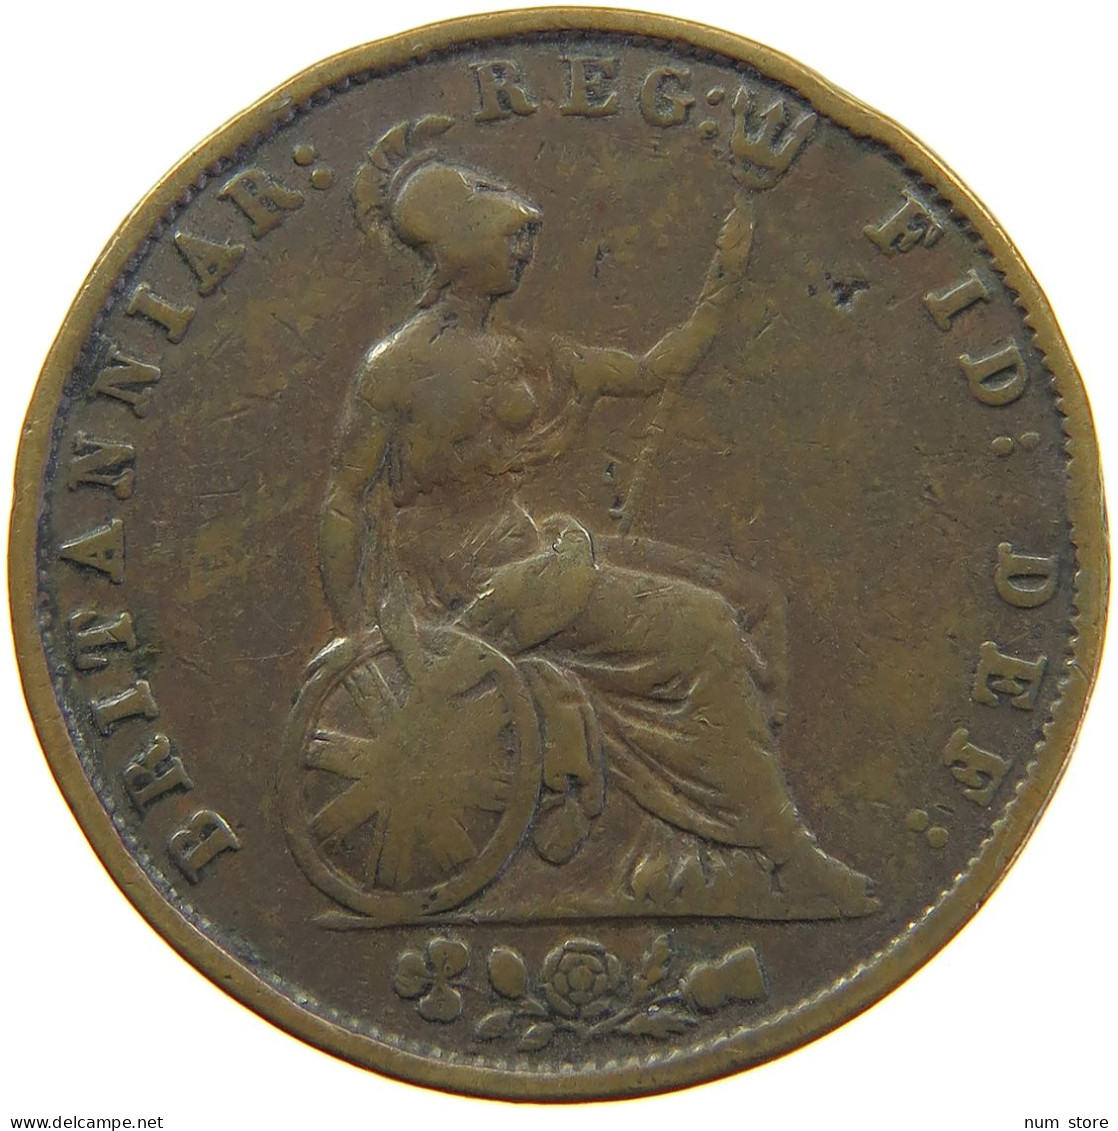 GREAT BRITAIN HALFPENNY 1853 Victoria 1837-1901 #s010 0279 - C. 1/2 Penny